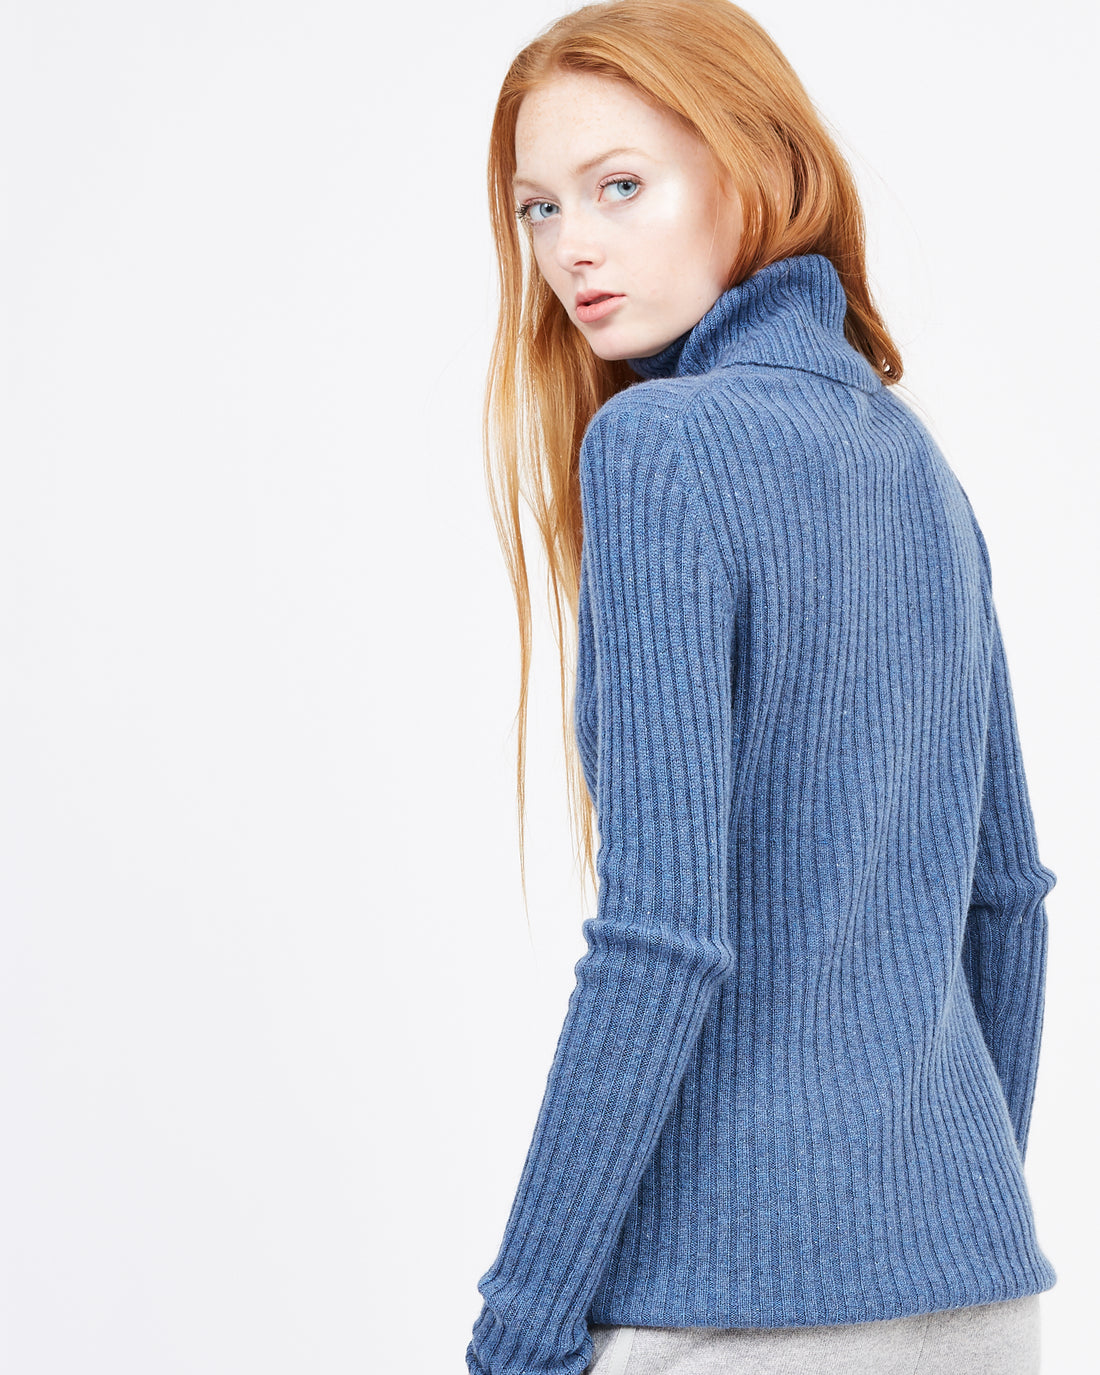 Blue turtleneck Ribbed Women's Winter Sweater